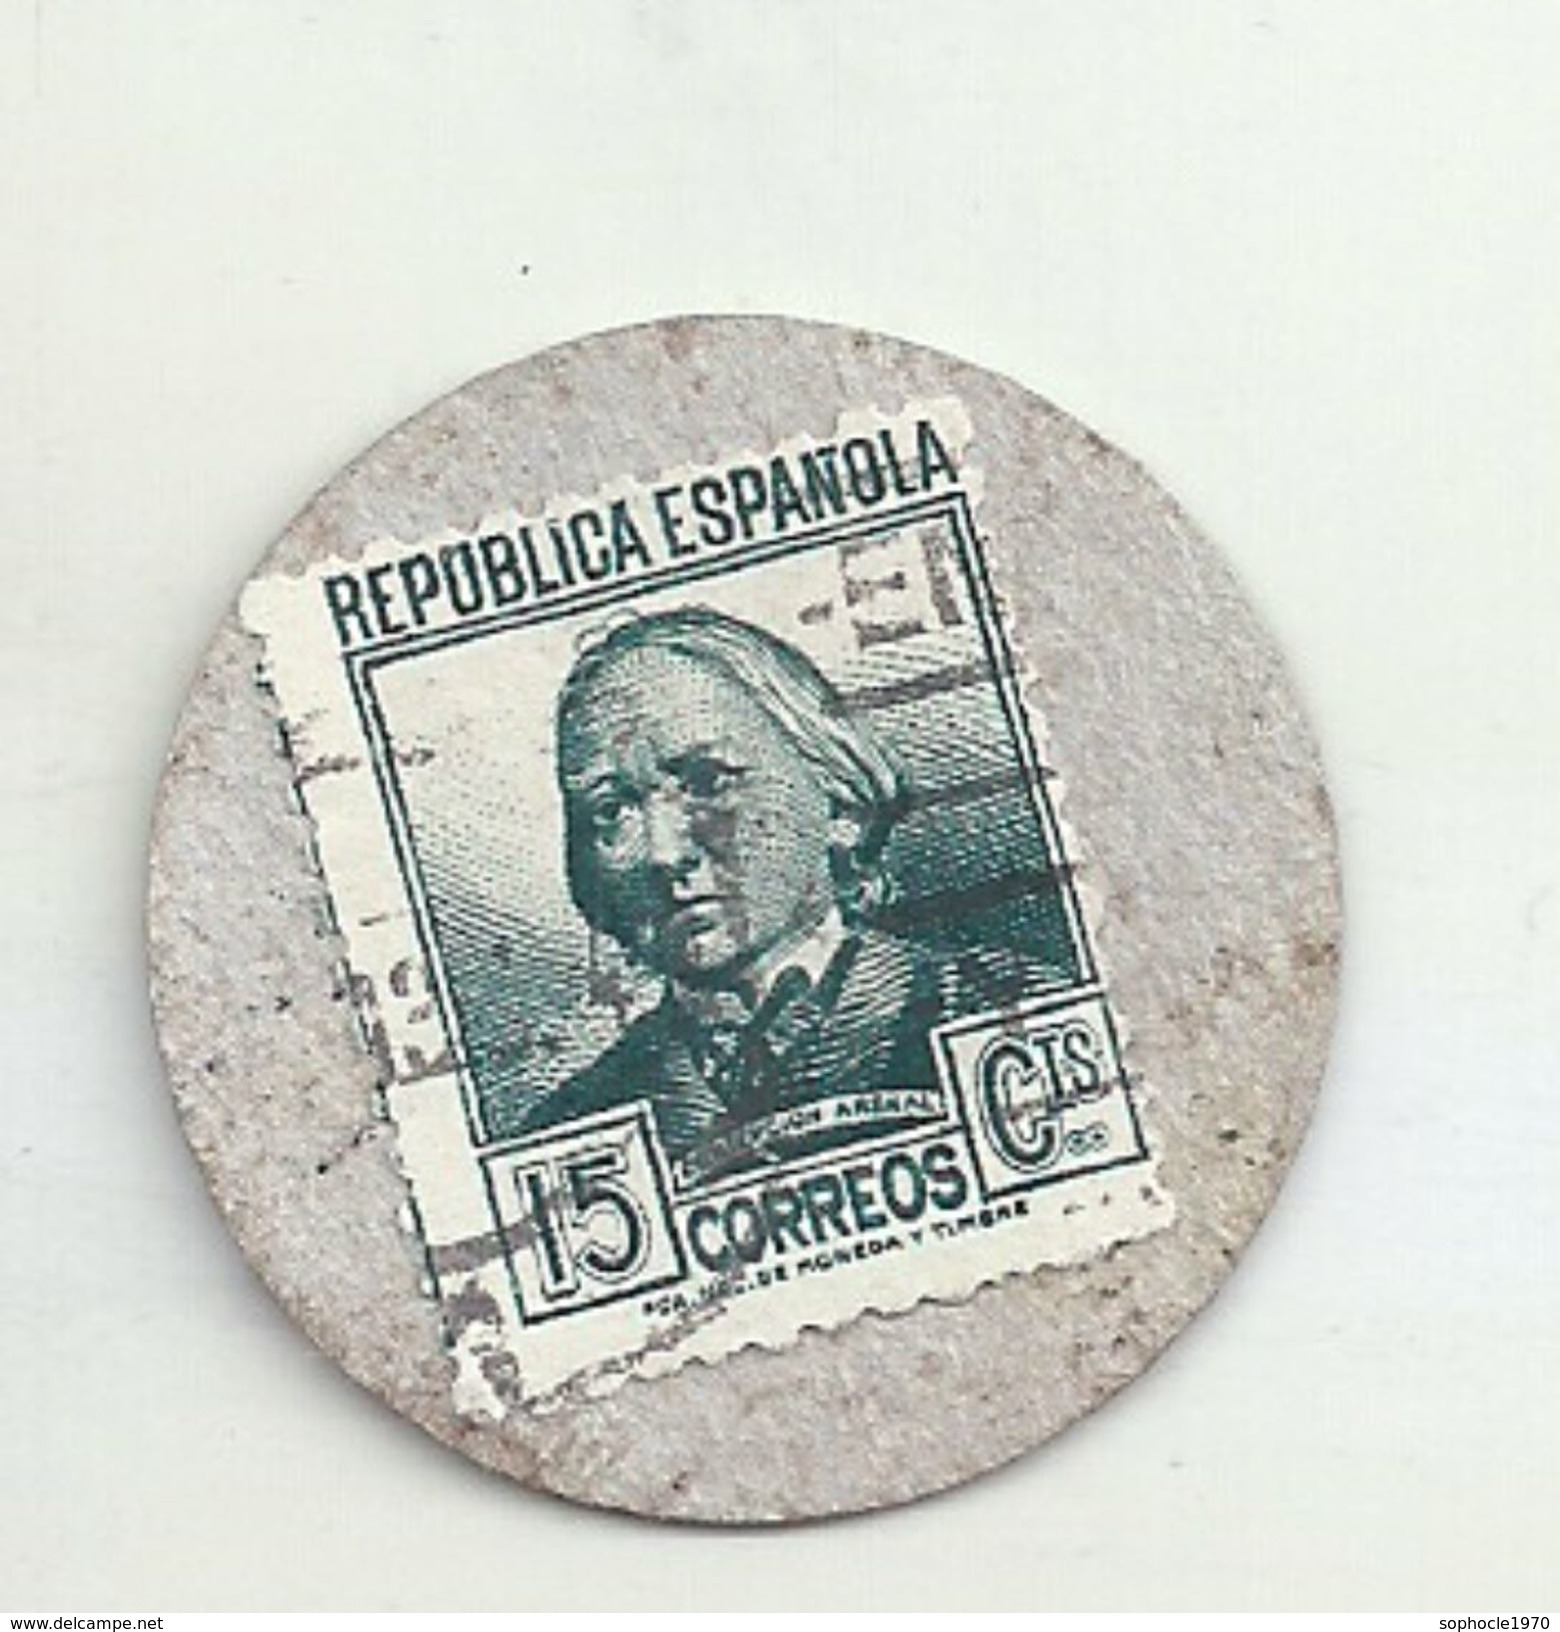 ESPAGNE - 1937 - République Espagnole  CATALOGNR - SEO DE URGEL -  Monéda D'Os Provisionas - Monnaie Carton Timbre -  Necessity Money